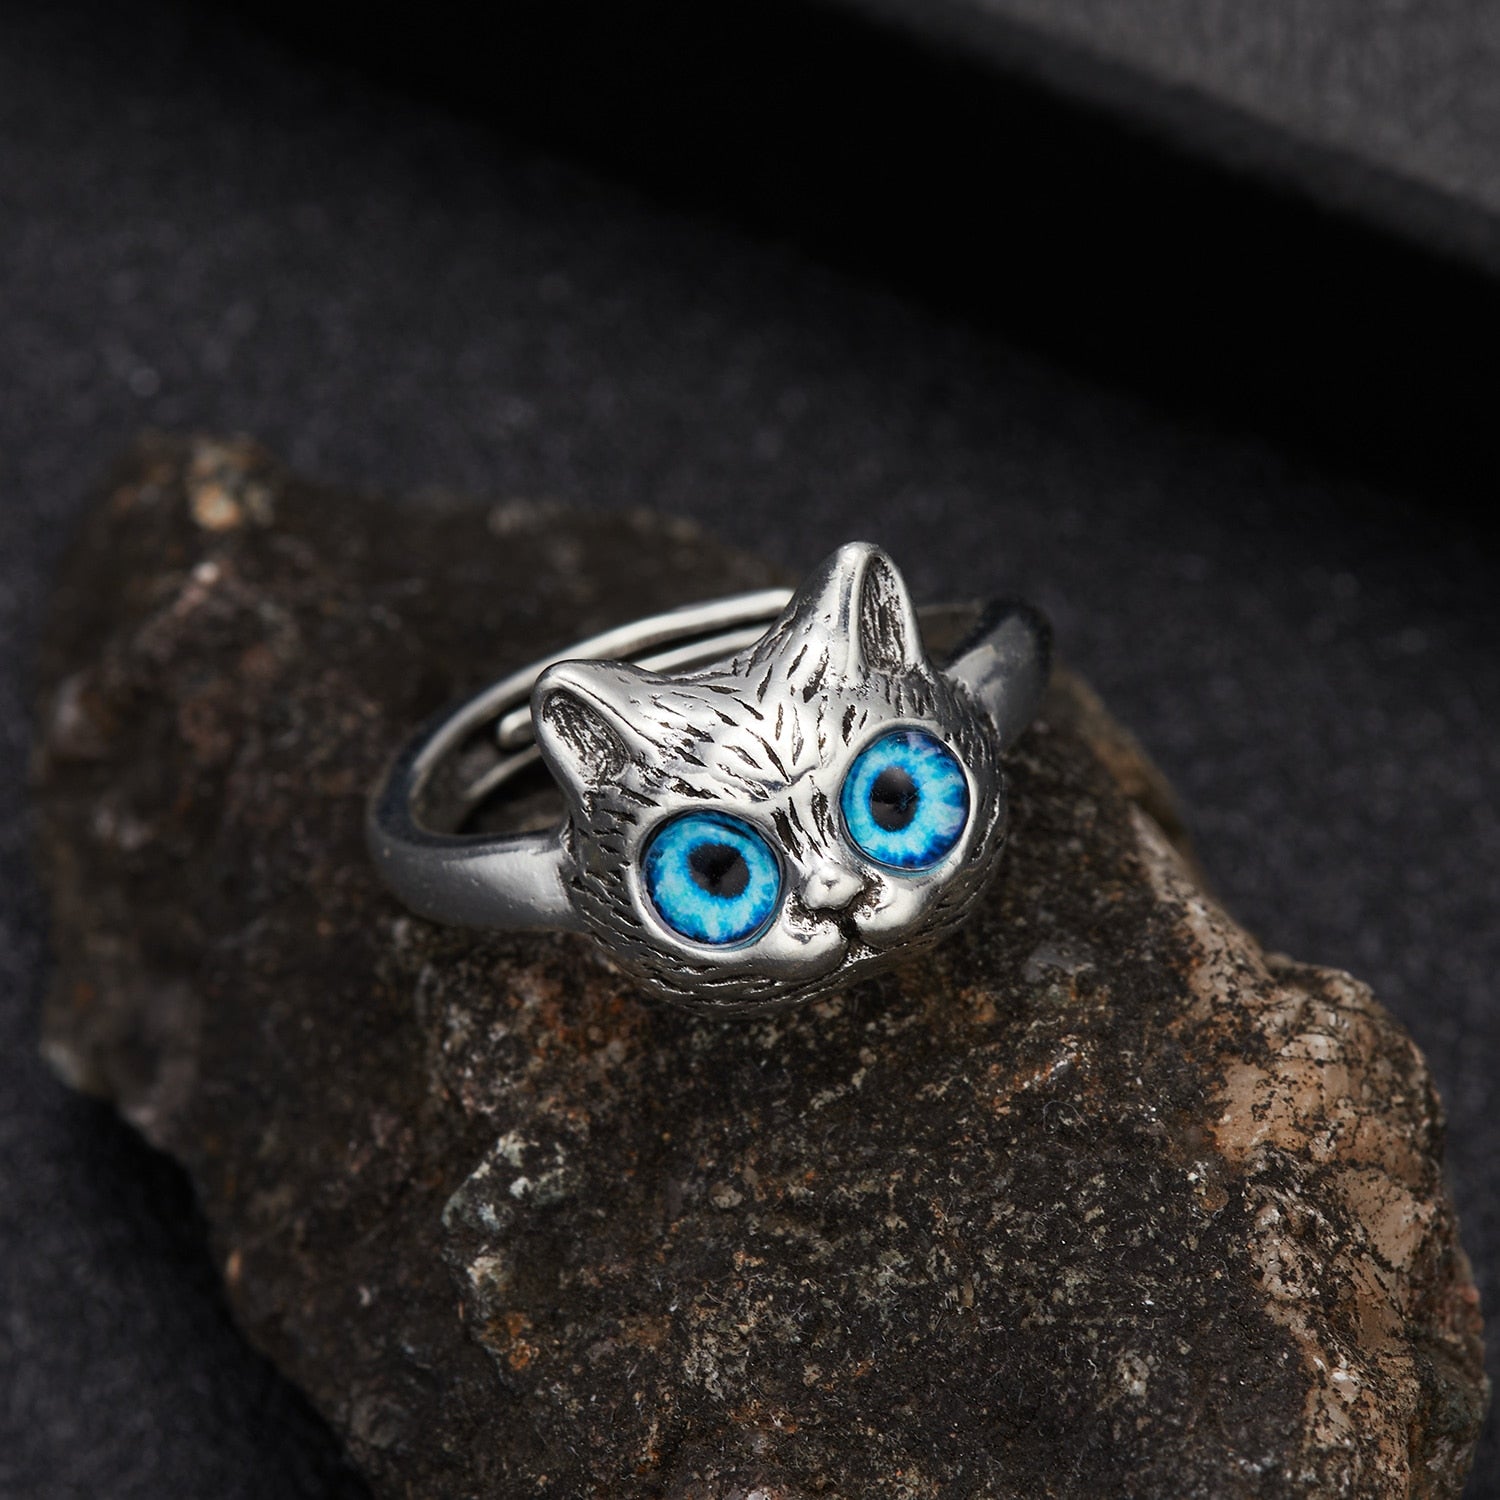 Gothic Vivid Adjustable Cat Ring